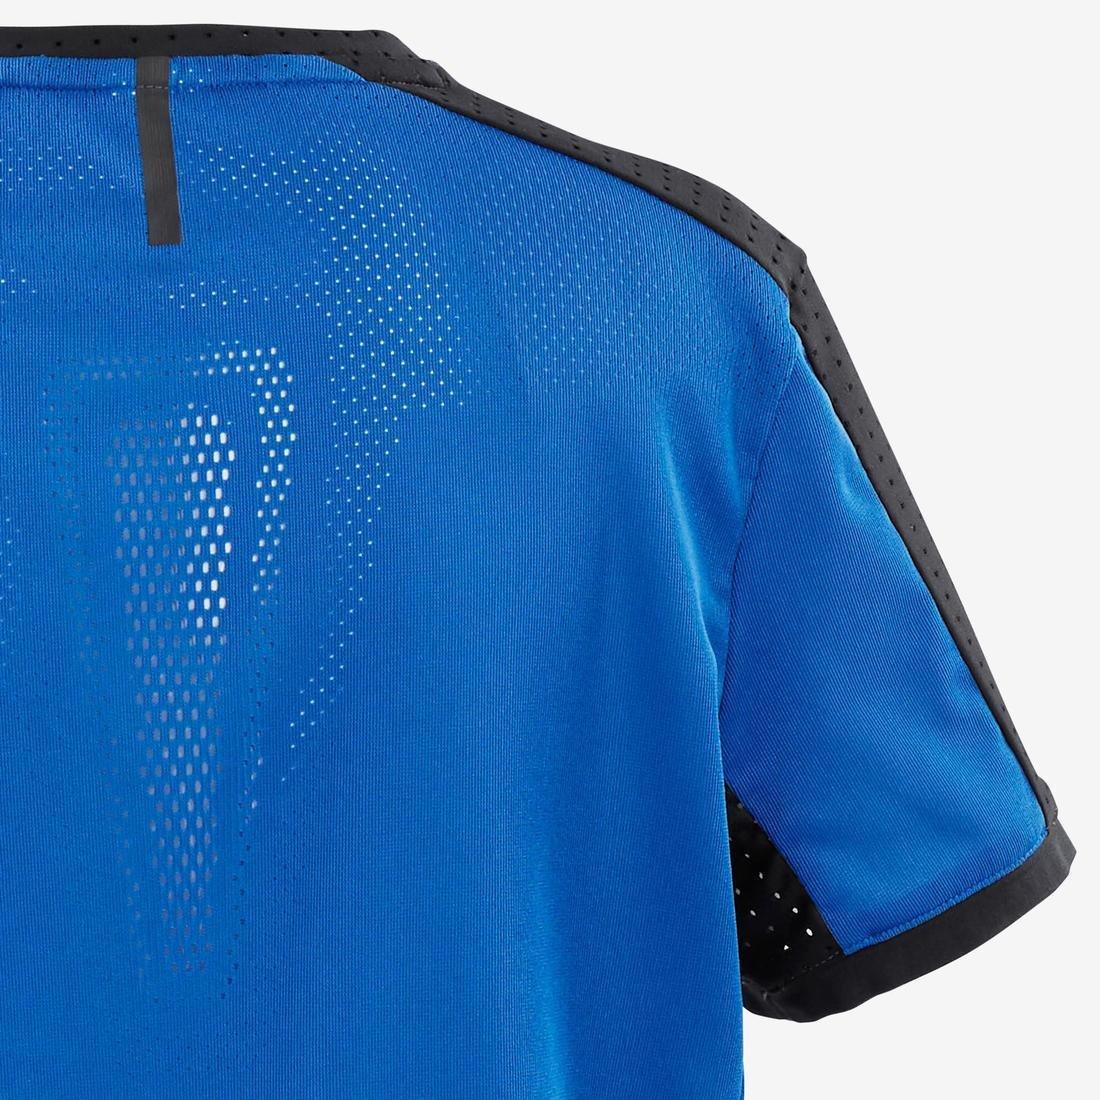 DOMYOS - Kids Boys Technical Breathable Gym T-Shirt S900, Blue